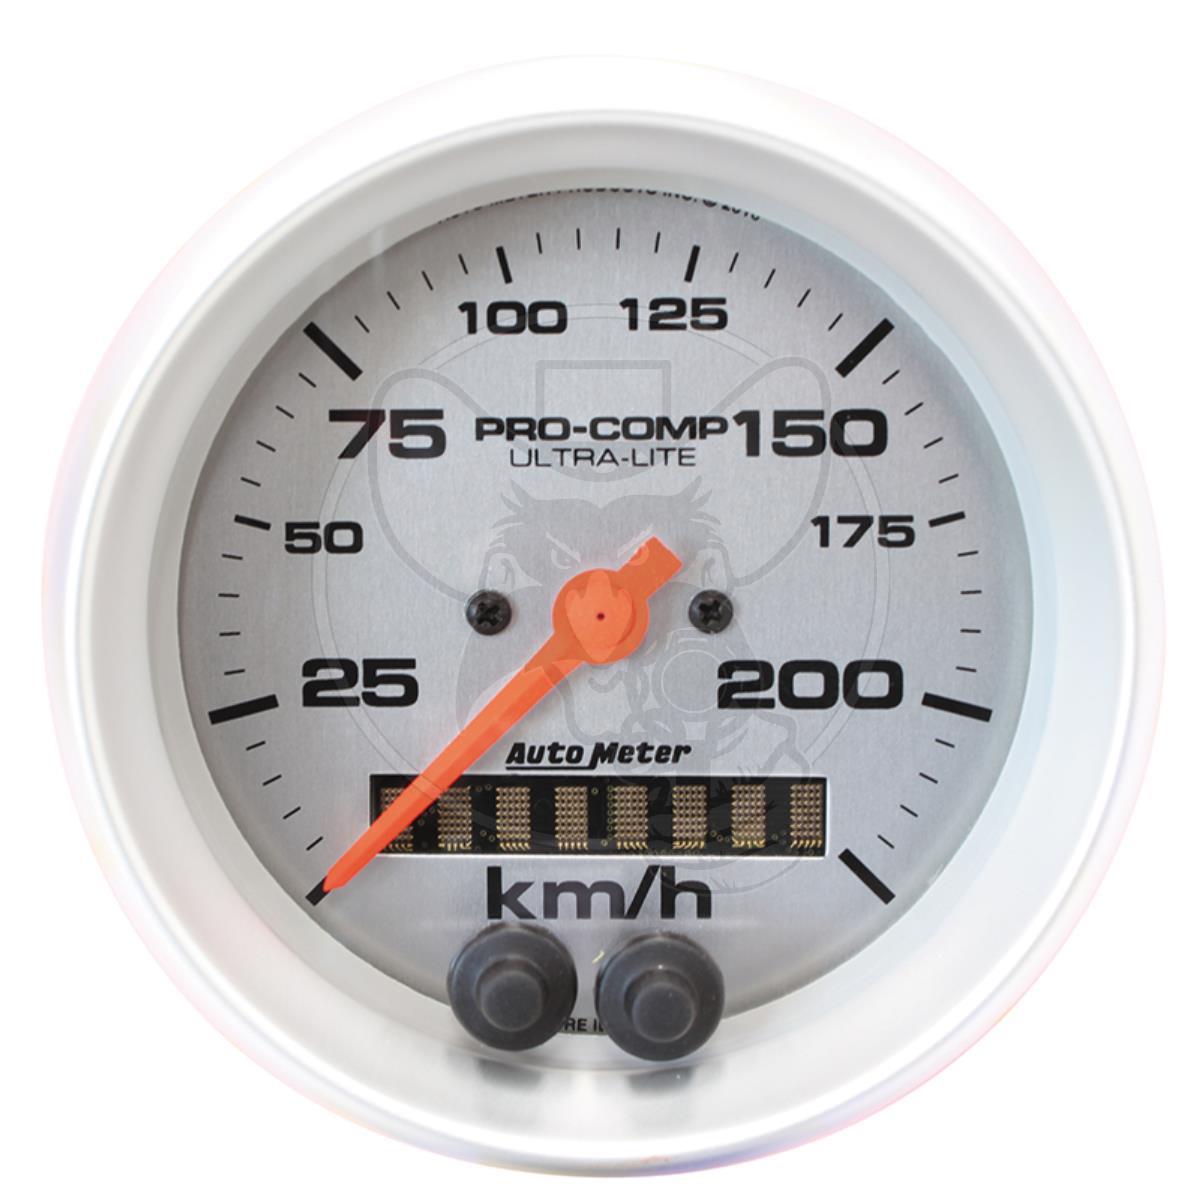 正規販売店】 Auto Meter 4498 5.000 Electric Ultra-Lite In-Dash 並行輸入品 Tachometer  in. 車用工具、修理、ガレージ用品